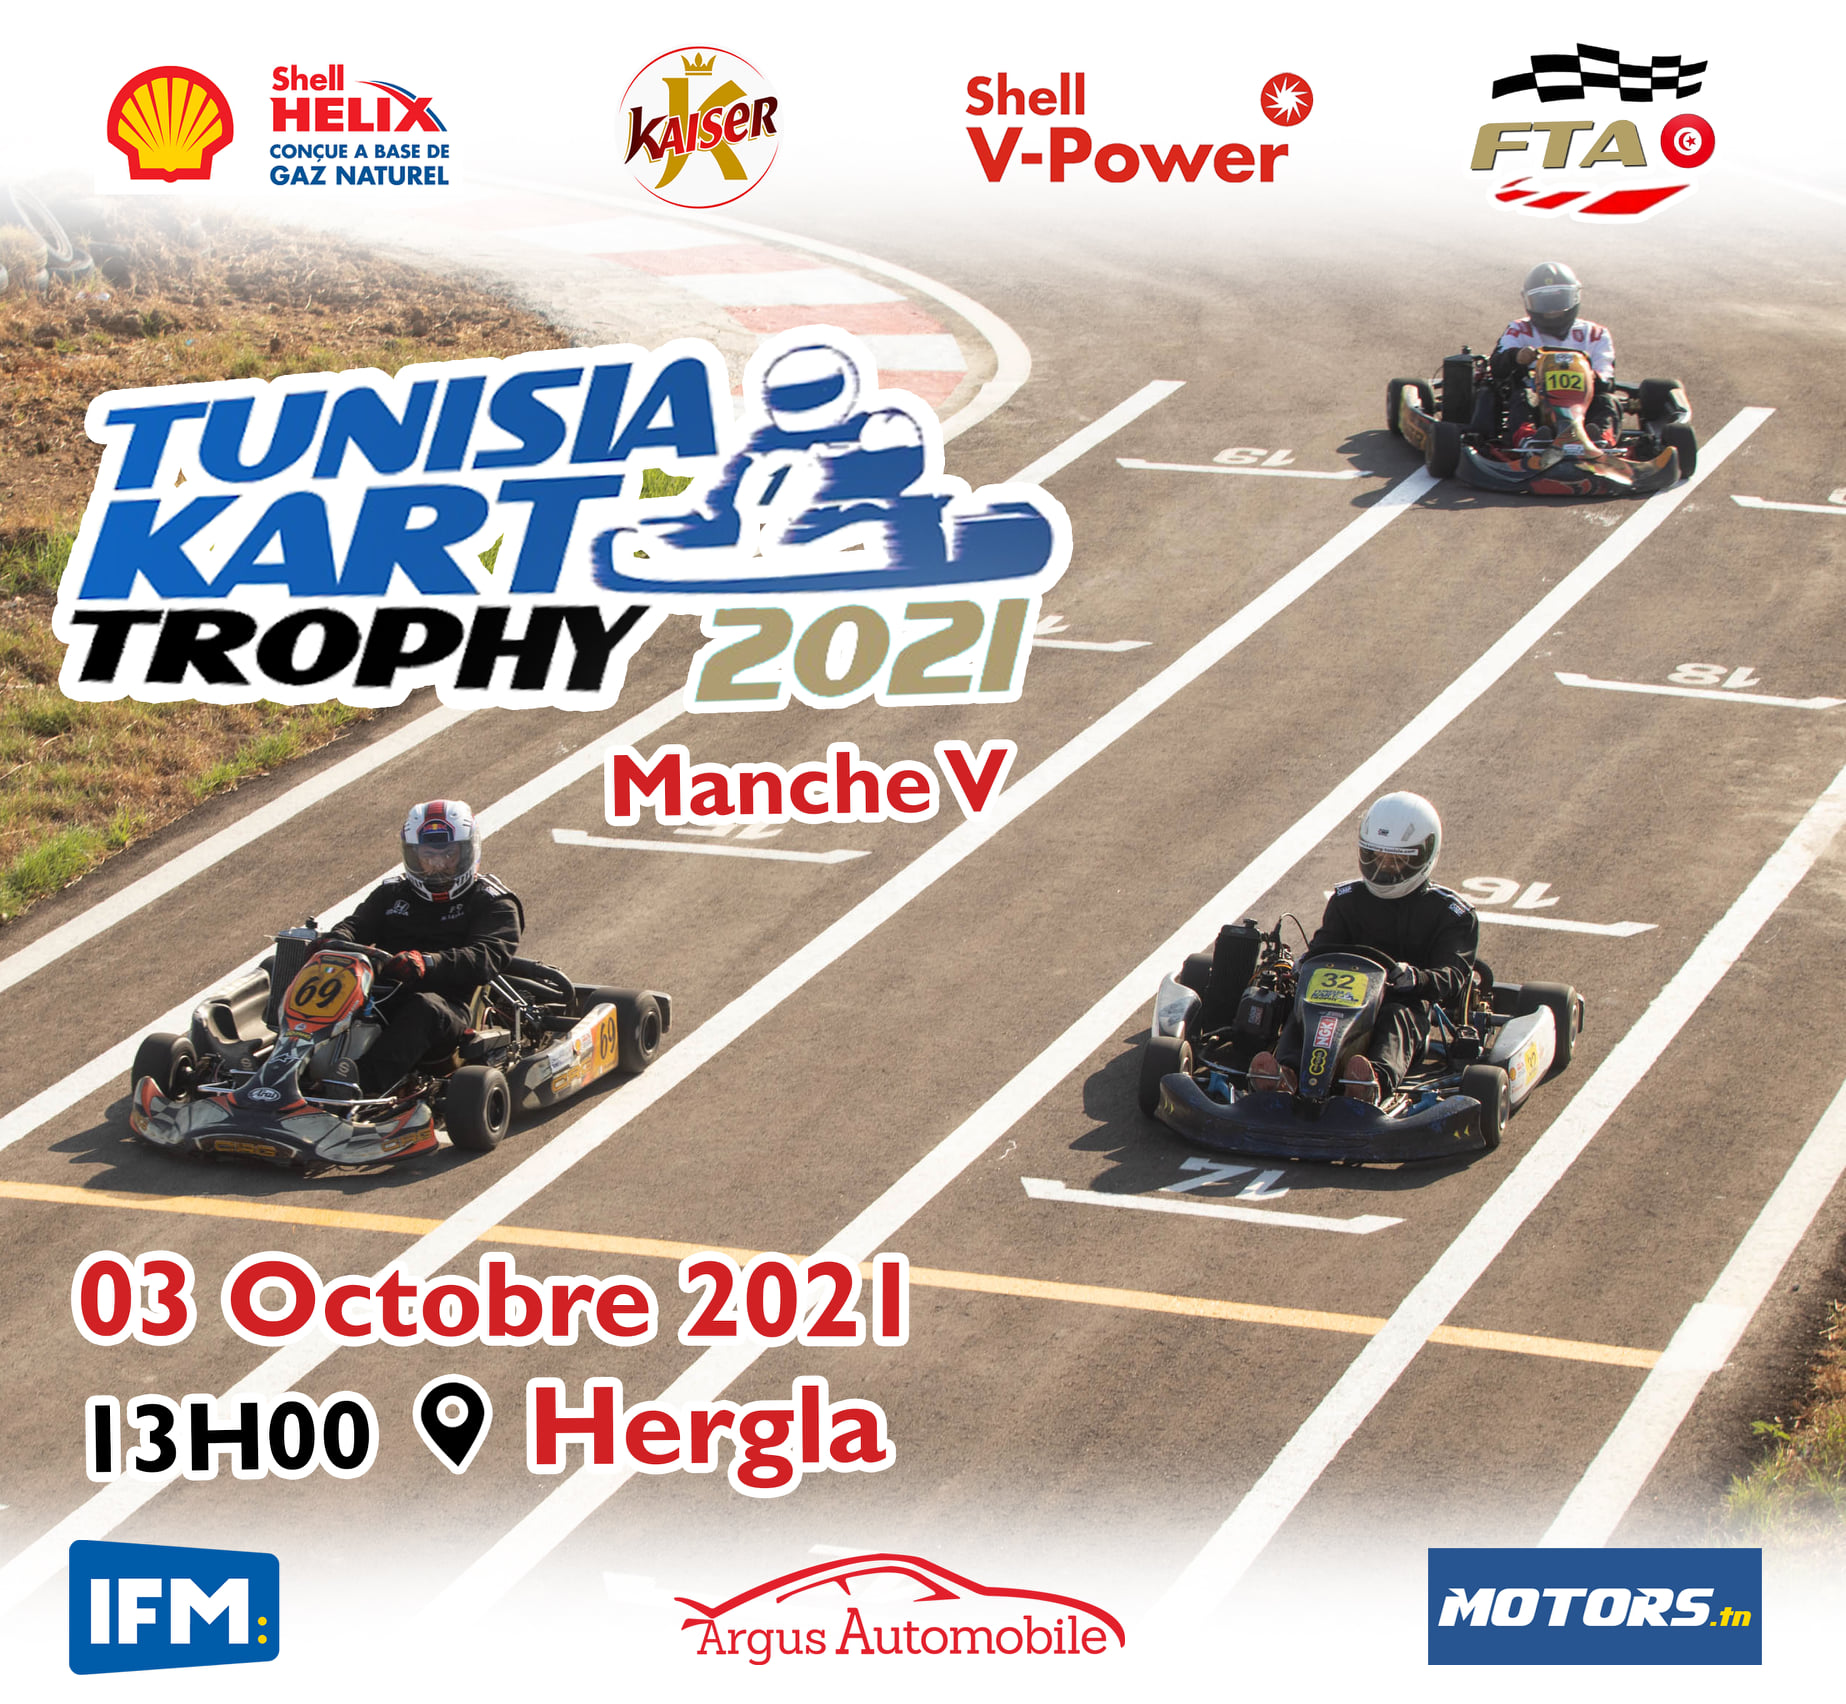 Tunisia Kart Trophy 2021 – Manche 5